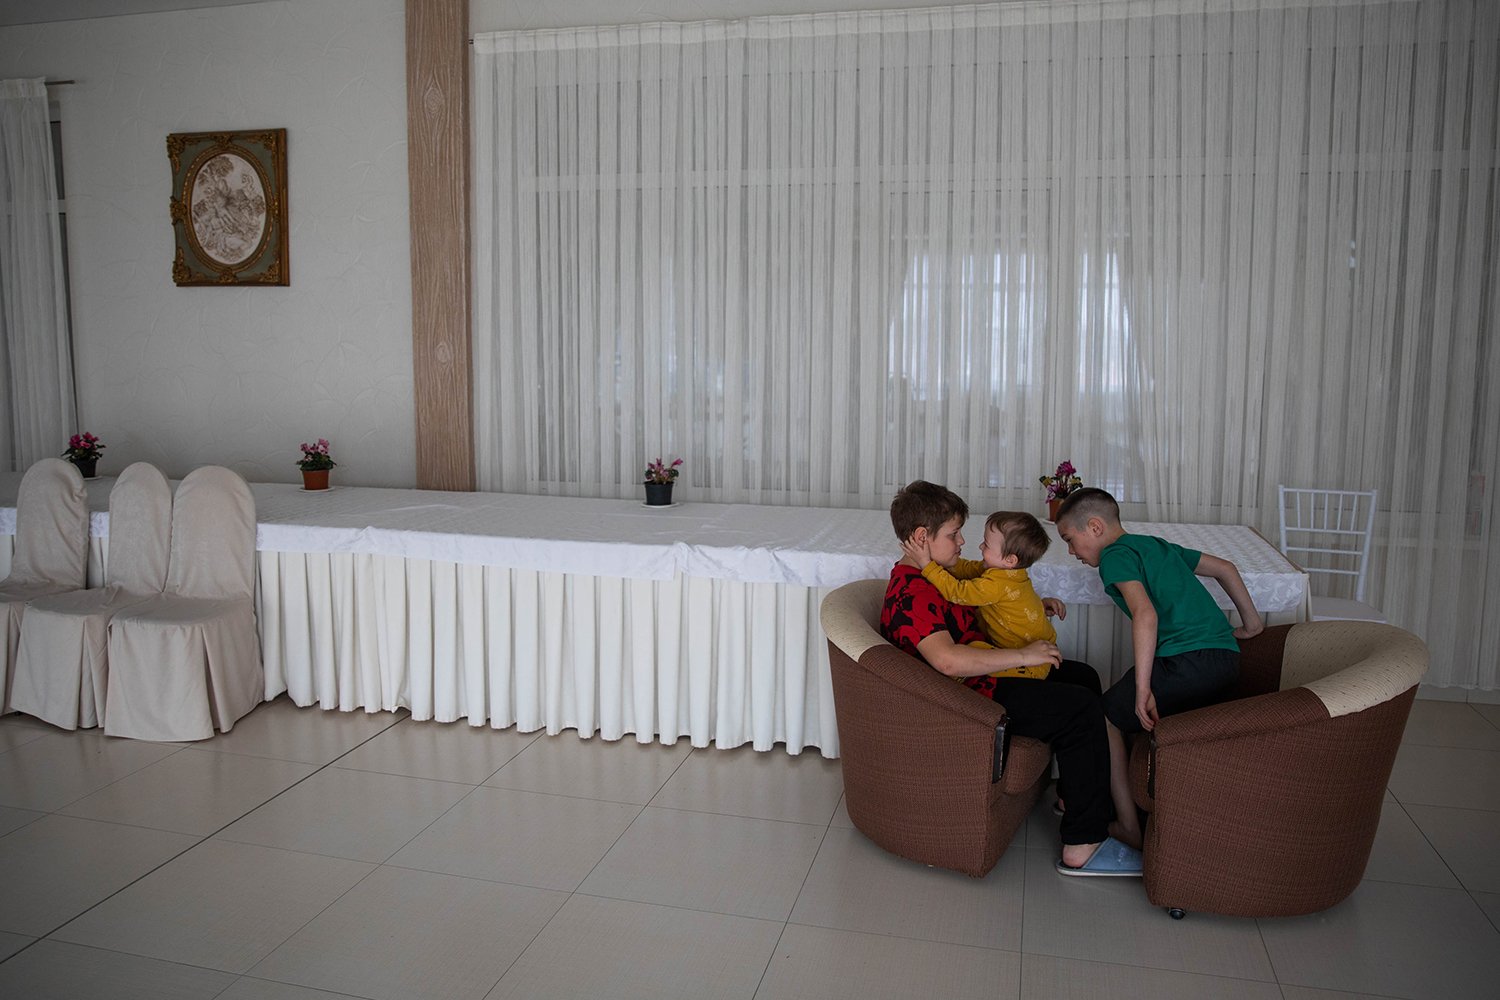 Children play inside a lobby of La Costesti.